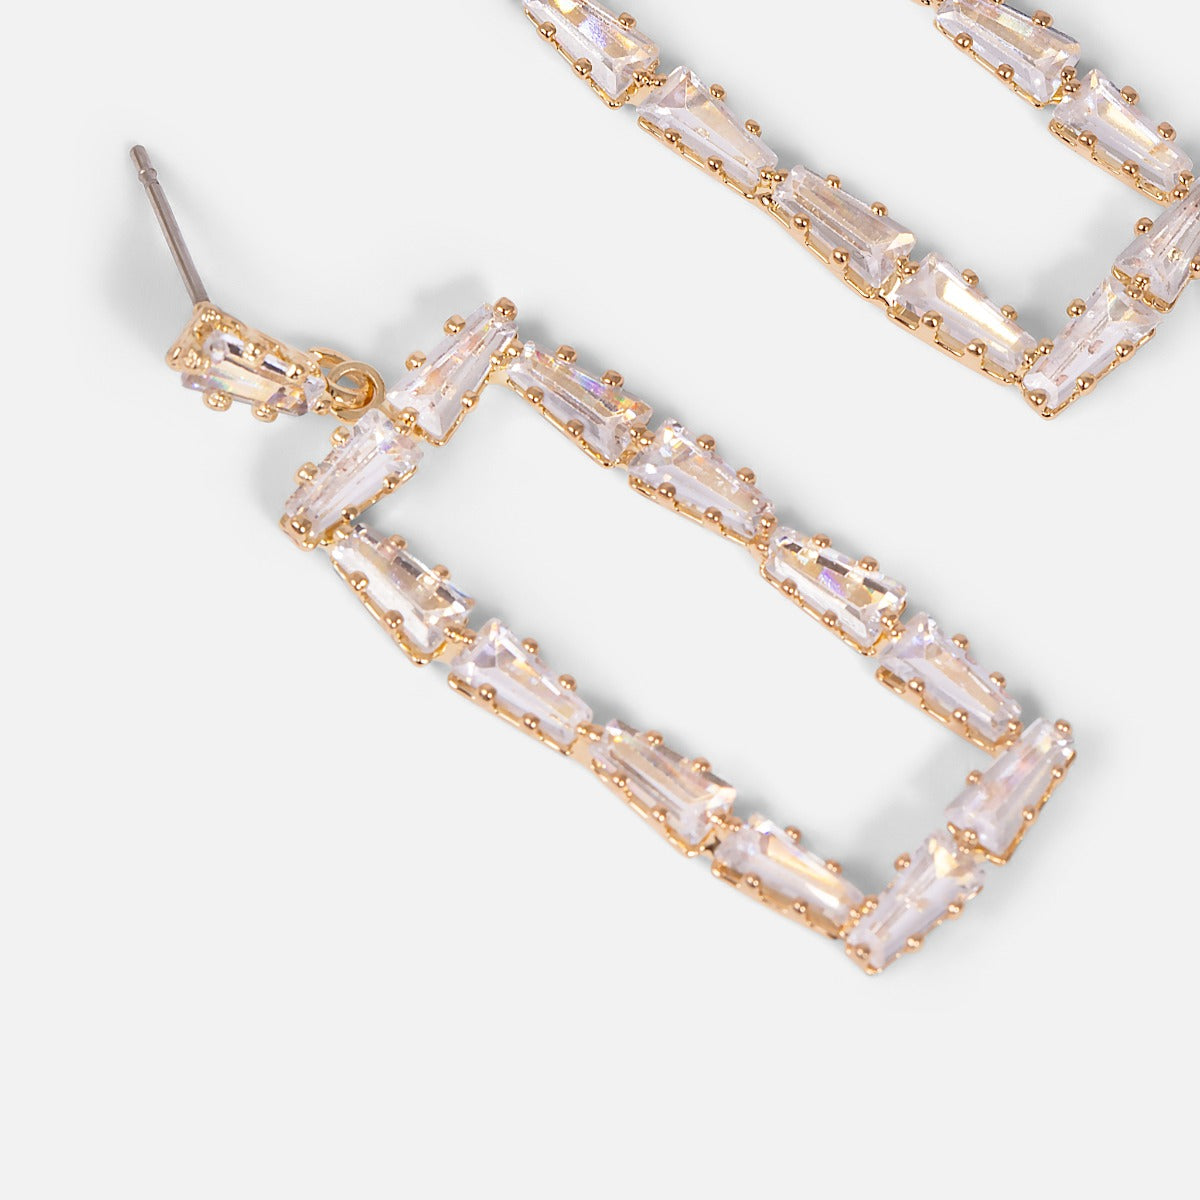 Long golden earrings in rectangular shape with stones